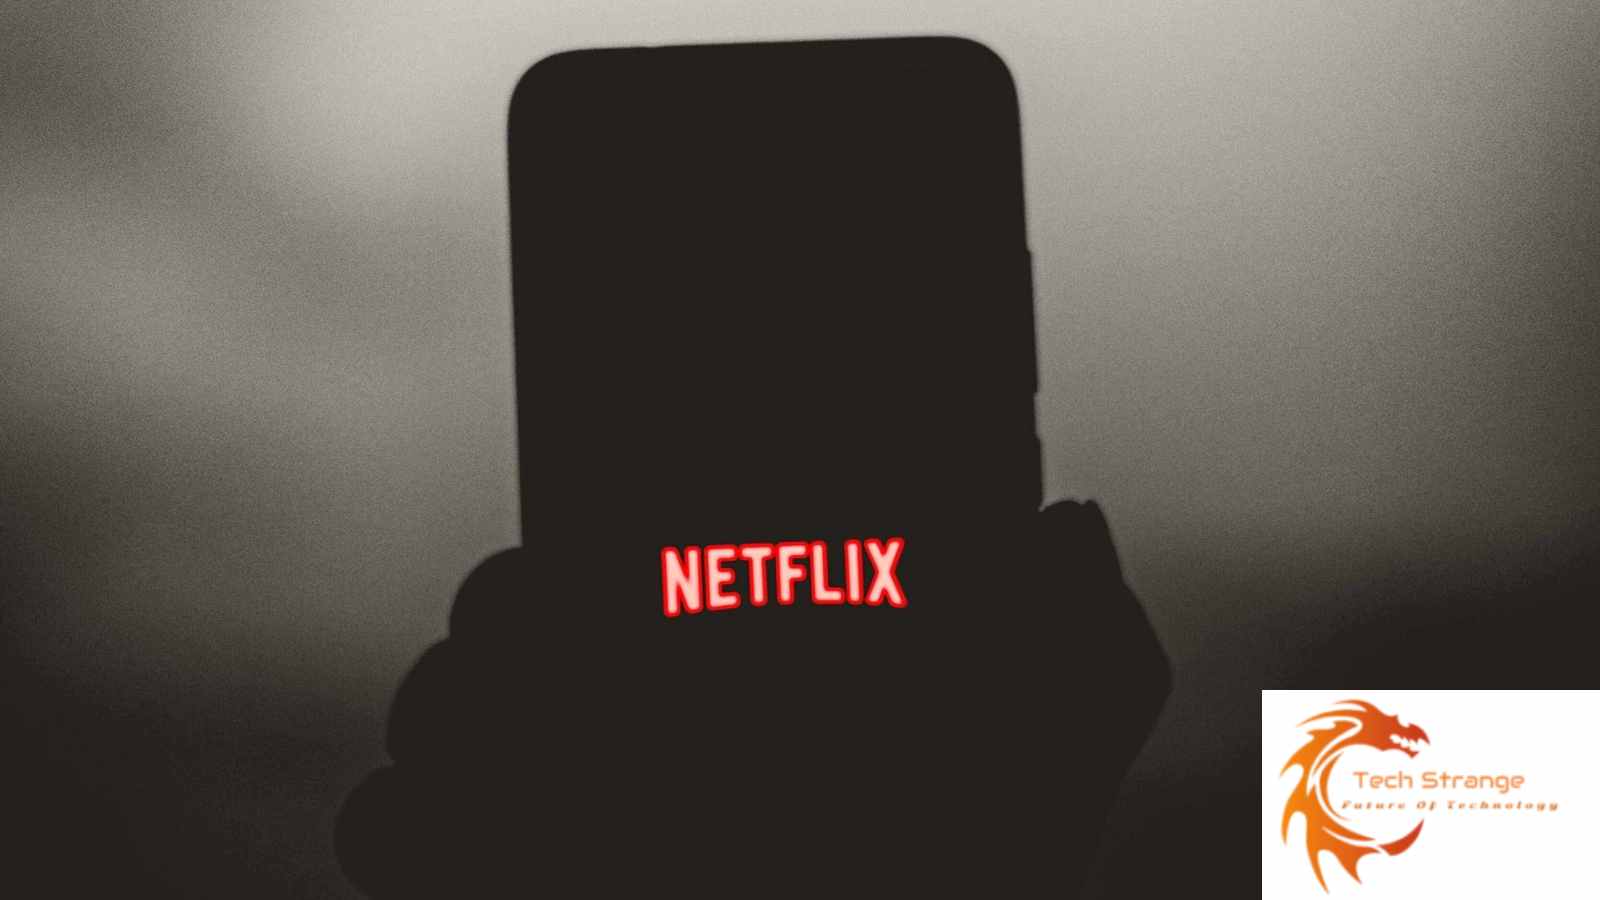 Netflix has received a Big Technological Upgrade